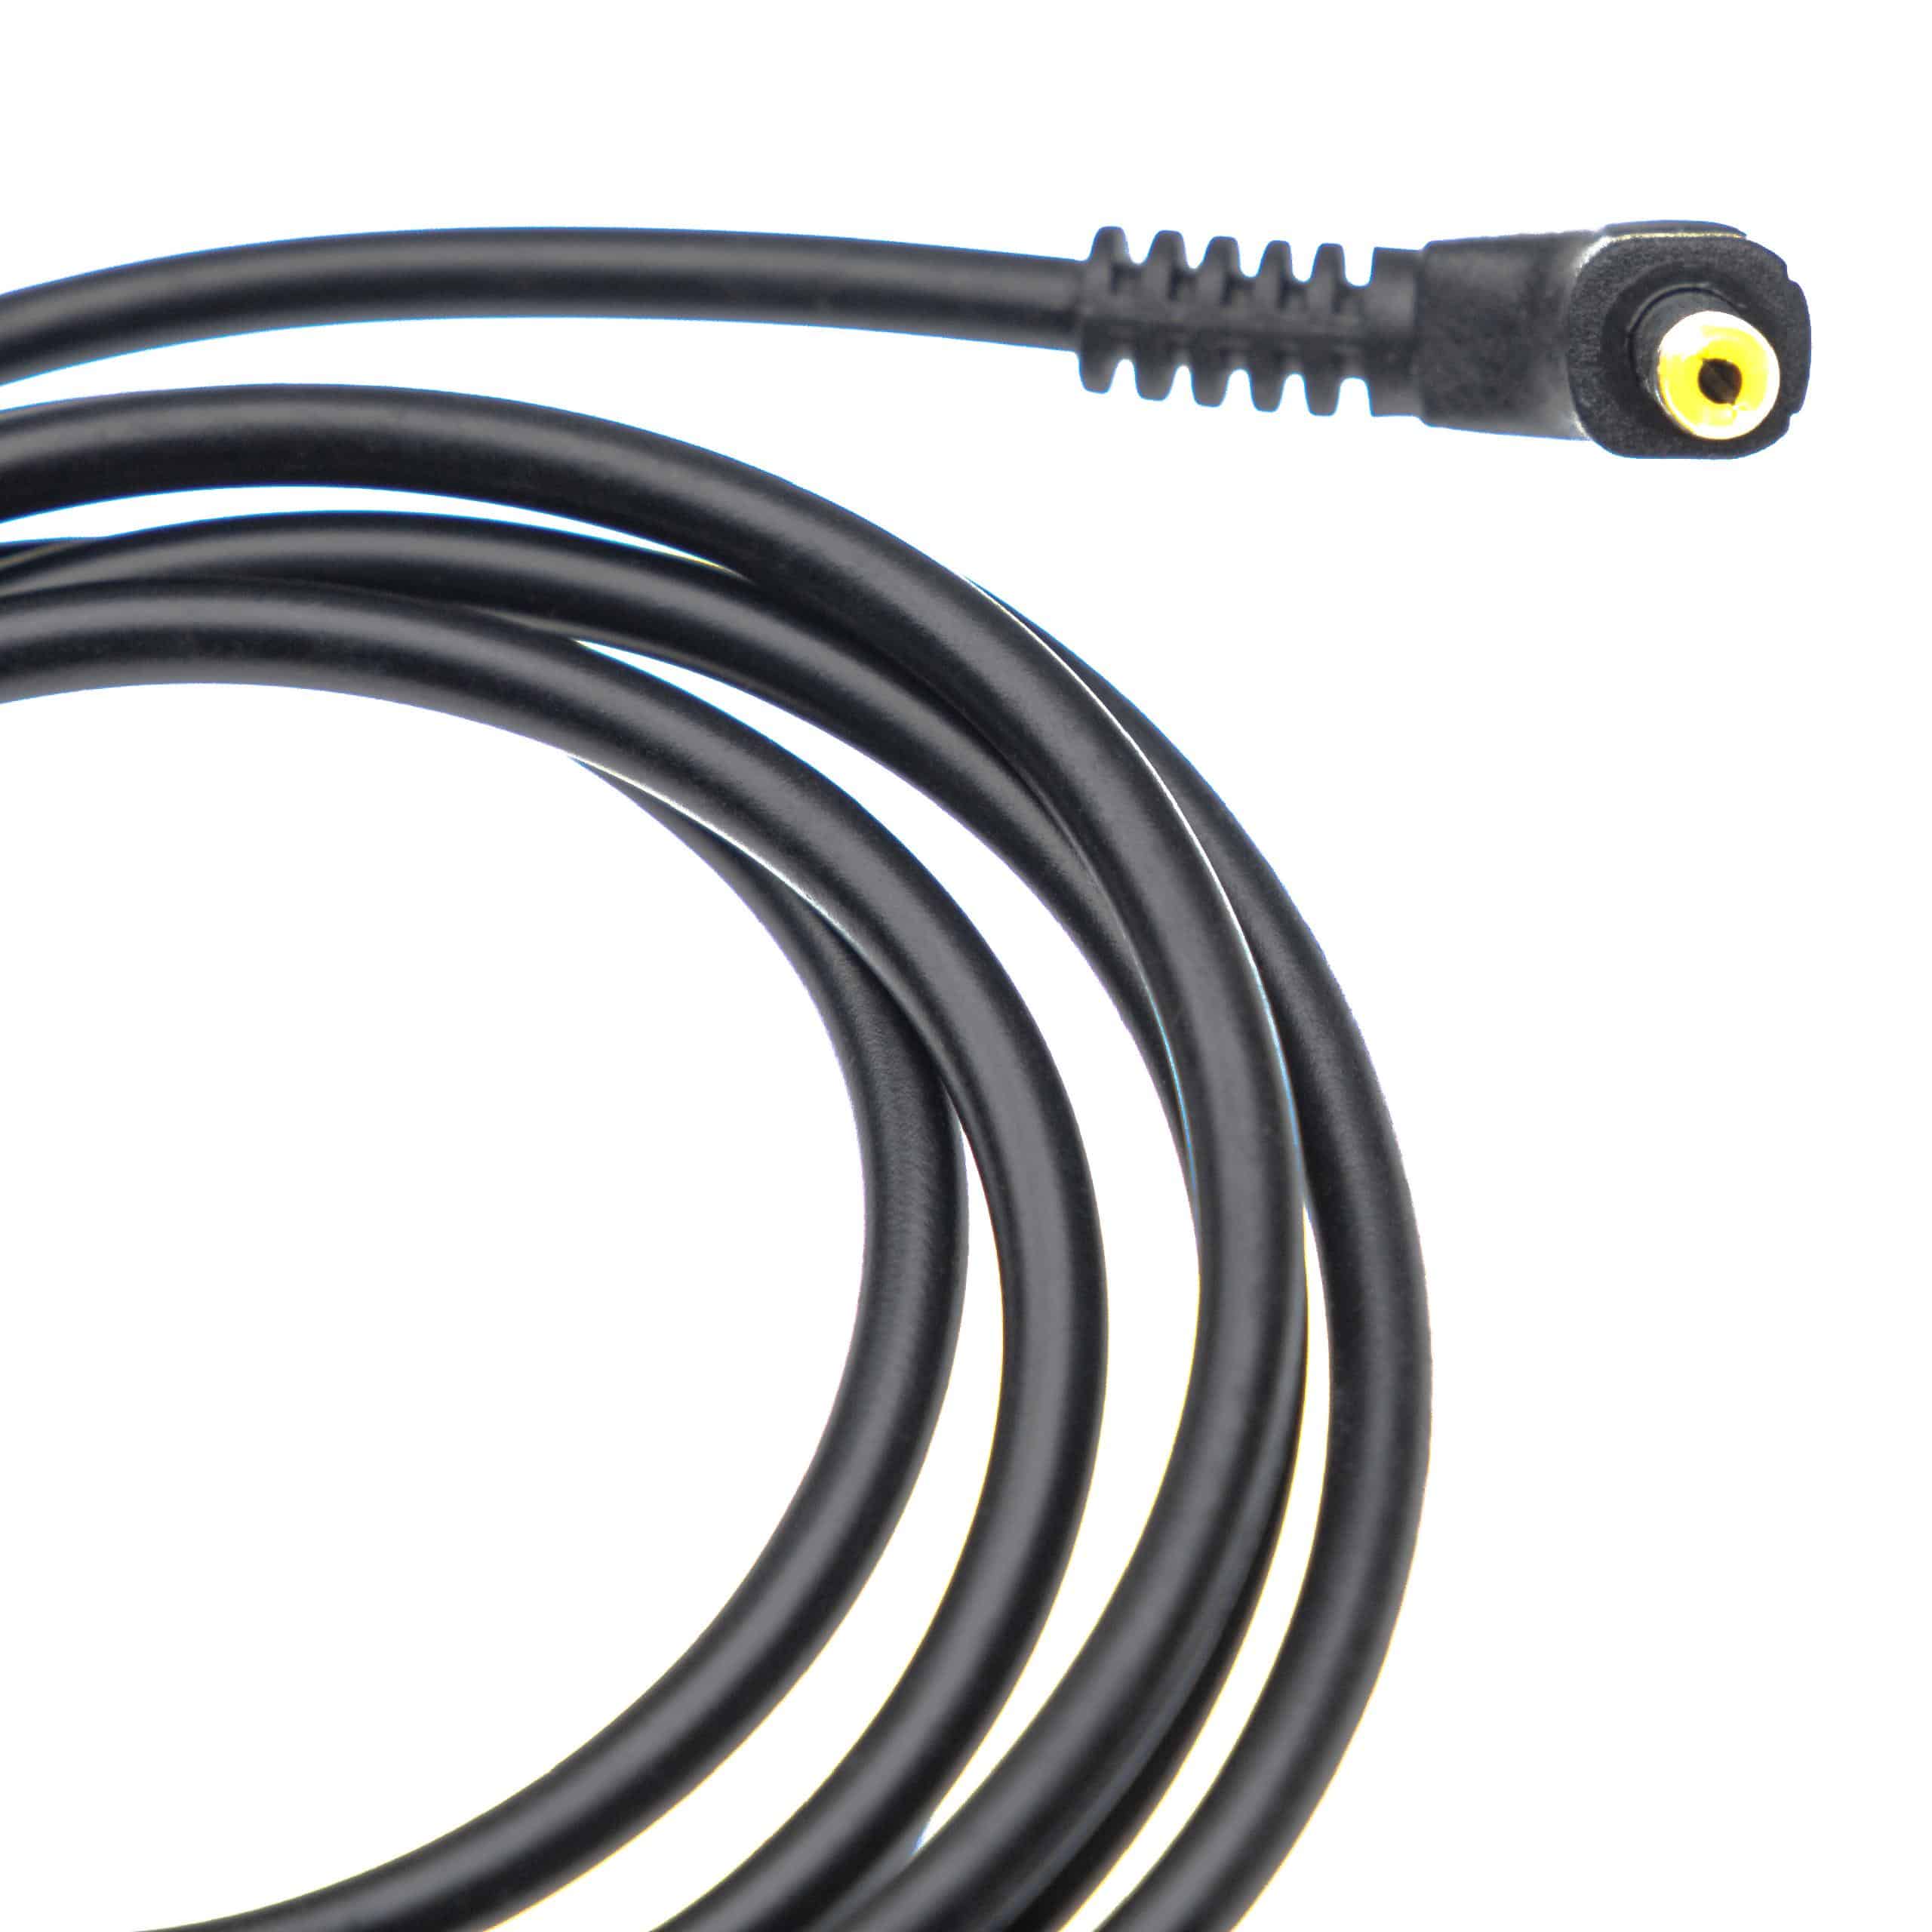 Kabel USB do ładowania aparatu Panasonic zamiennik Panasonic K2GHYYS00002 - 1,2 m